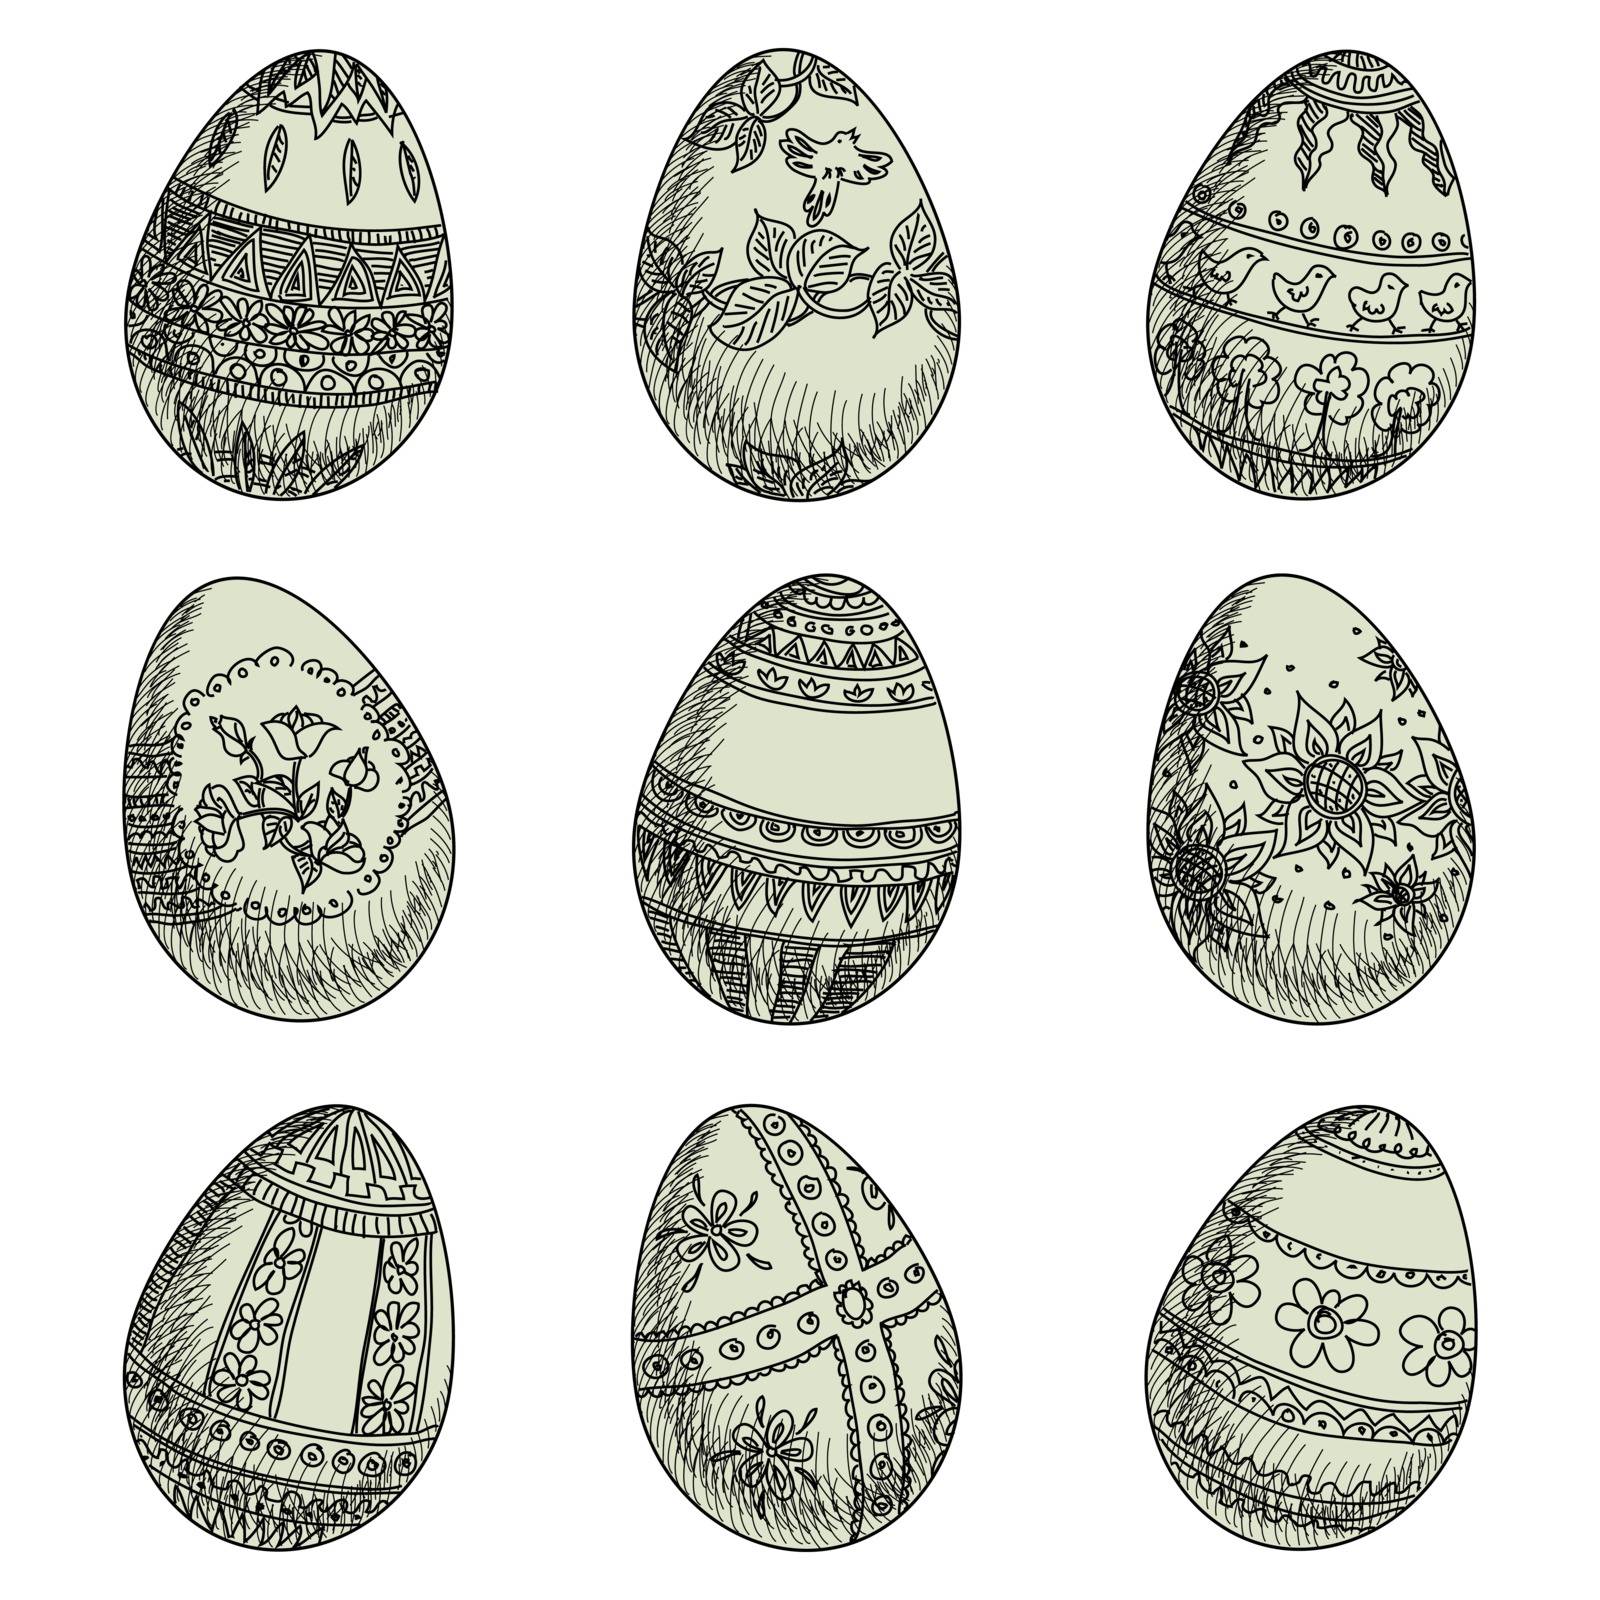 set of Easter eggs